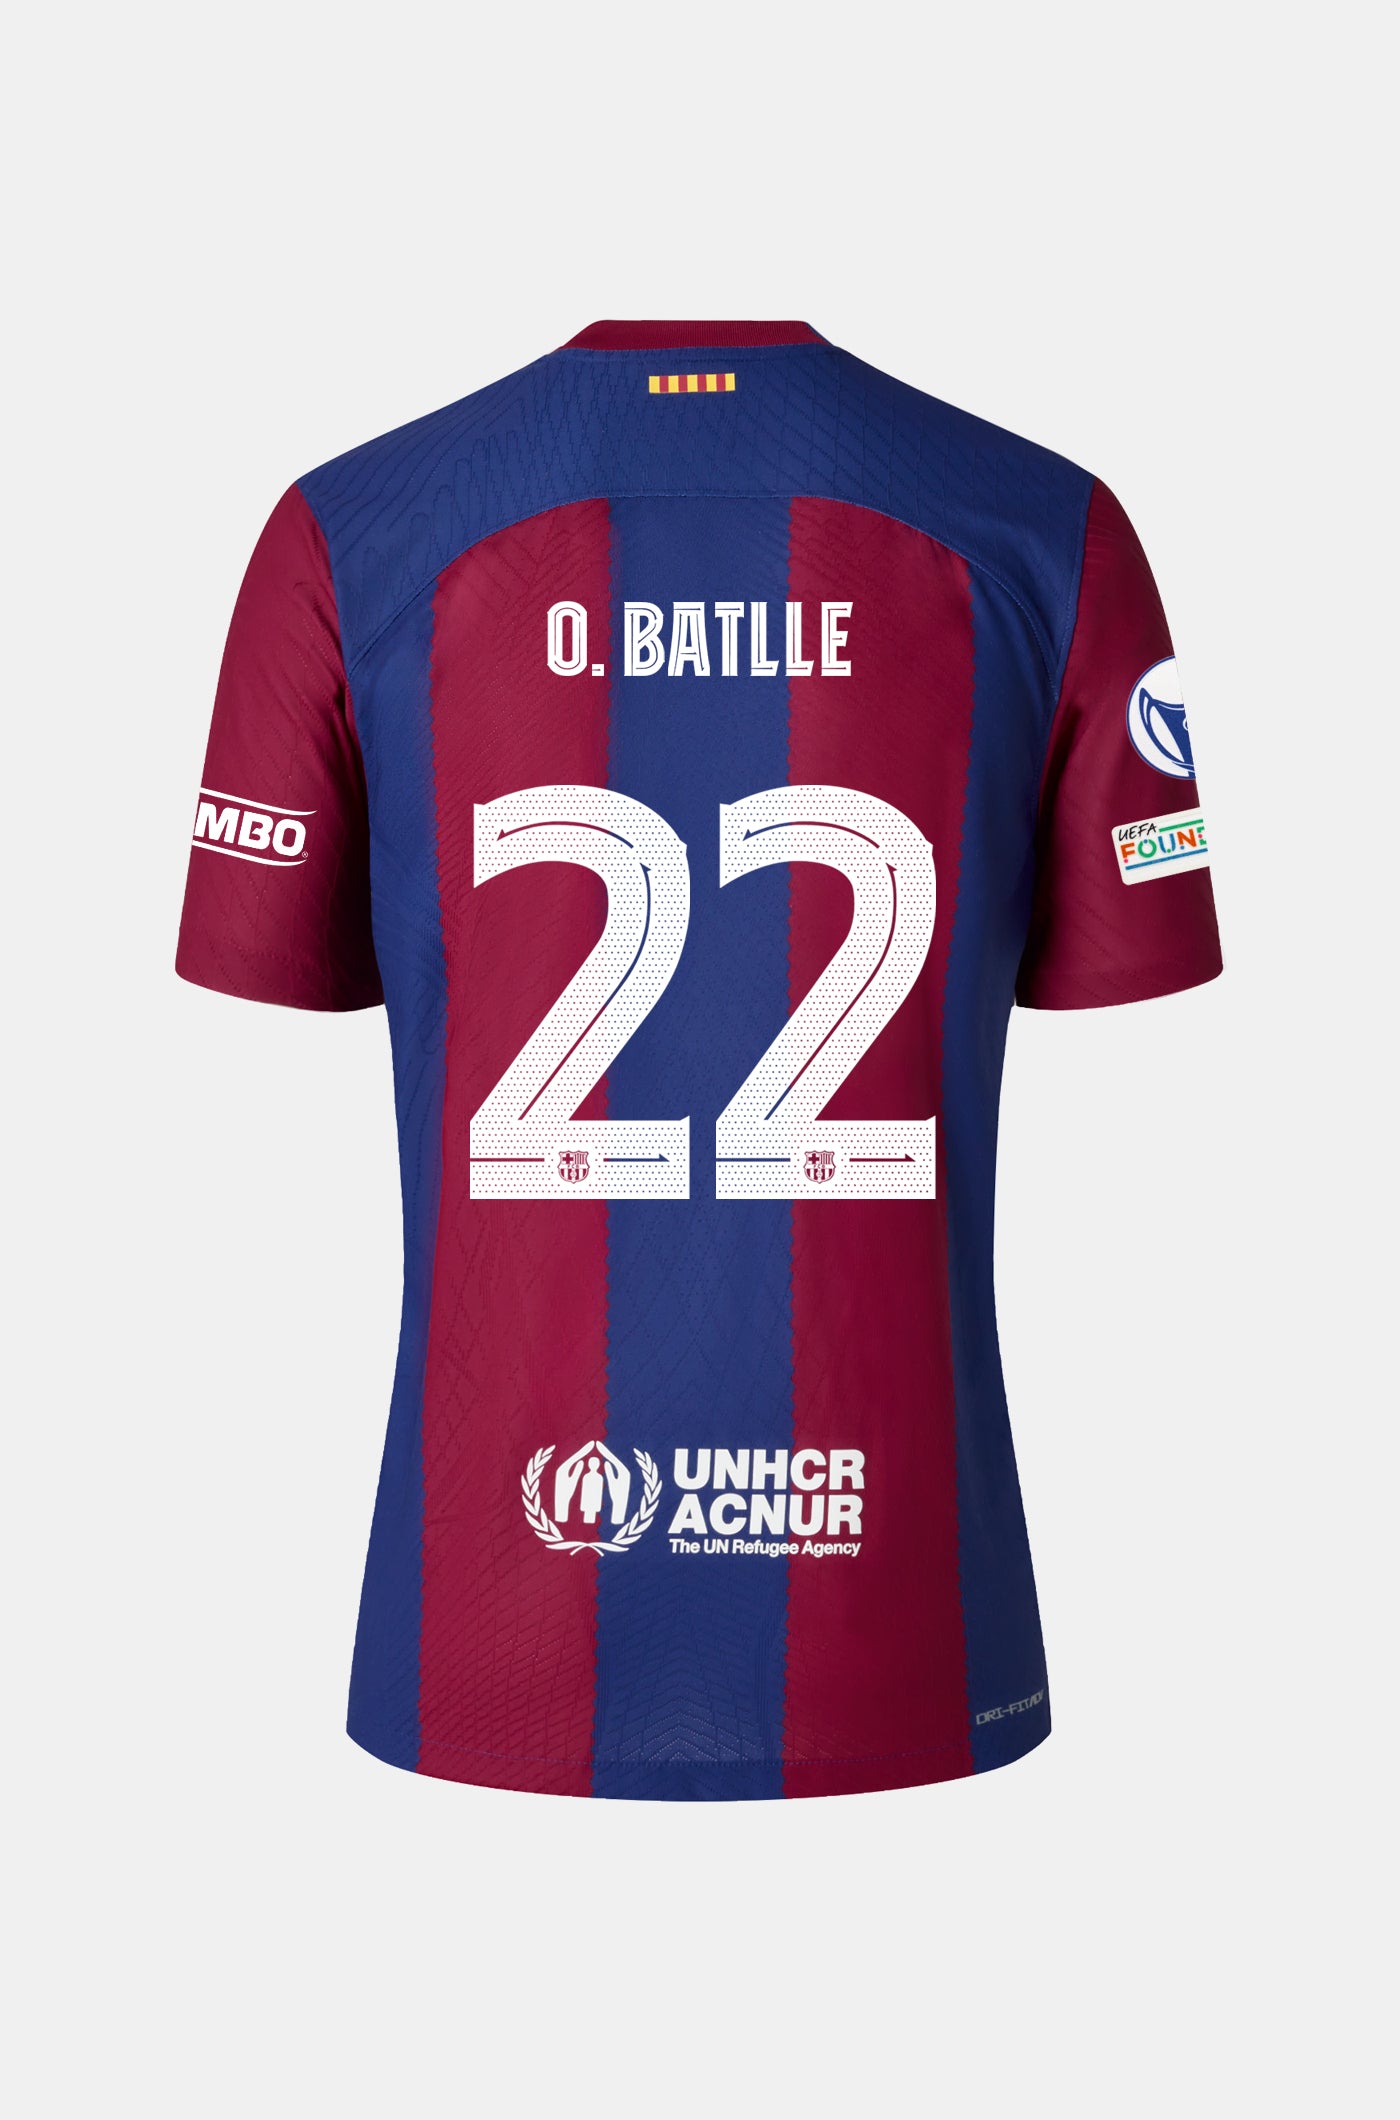 UWCL FC Barcelona home shirt 23/24 Player’s Edition  - O. BATLLE